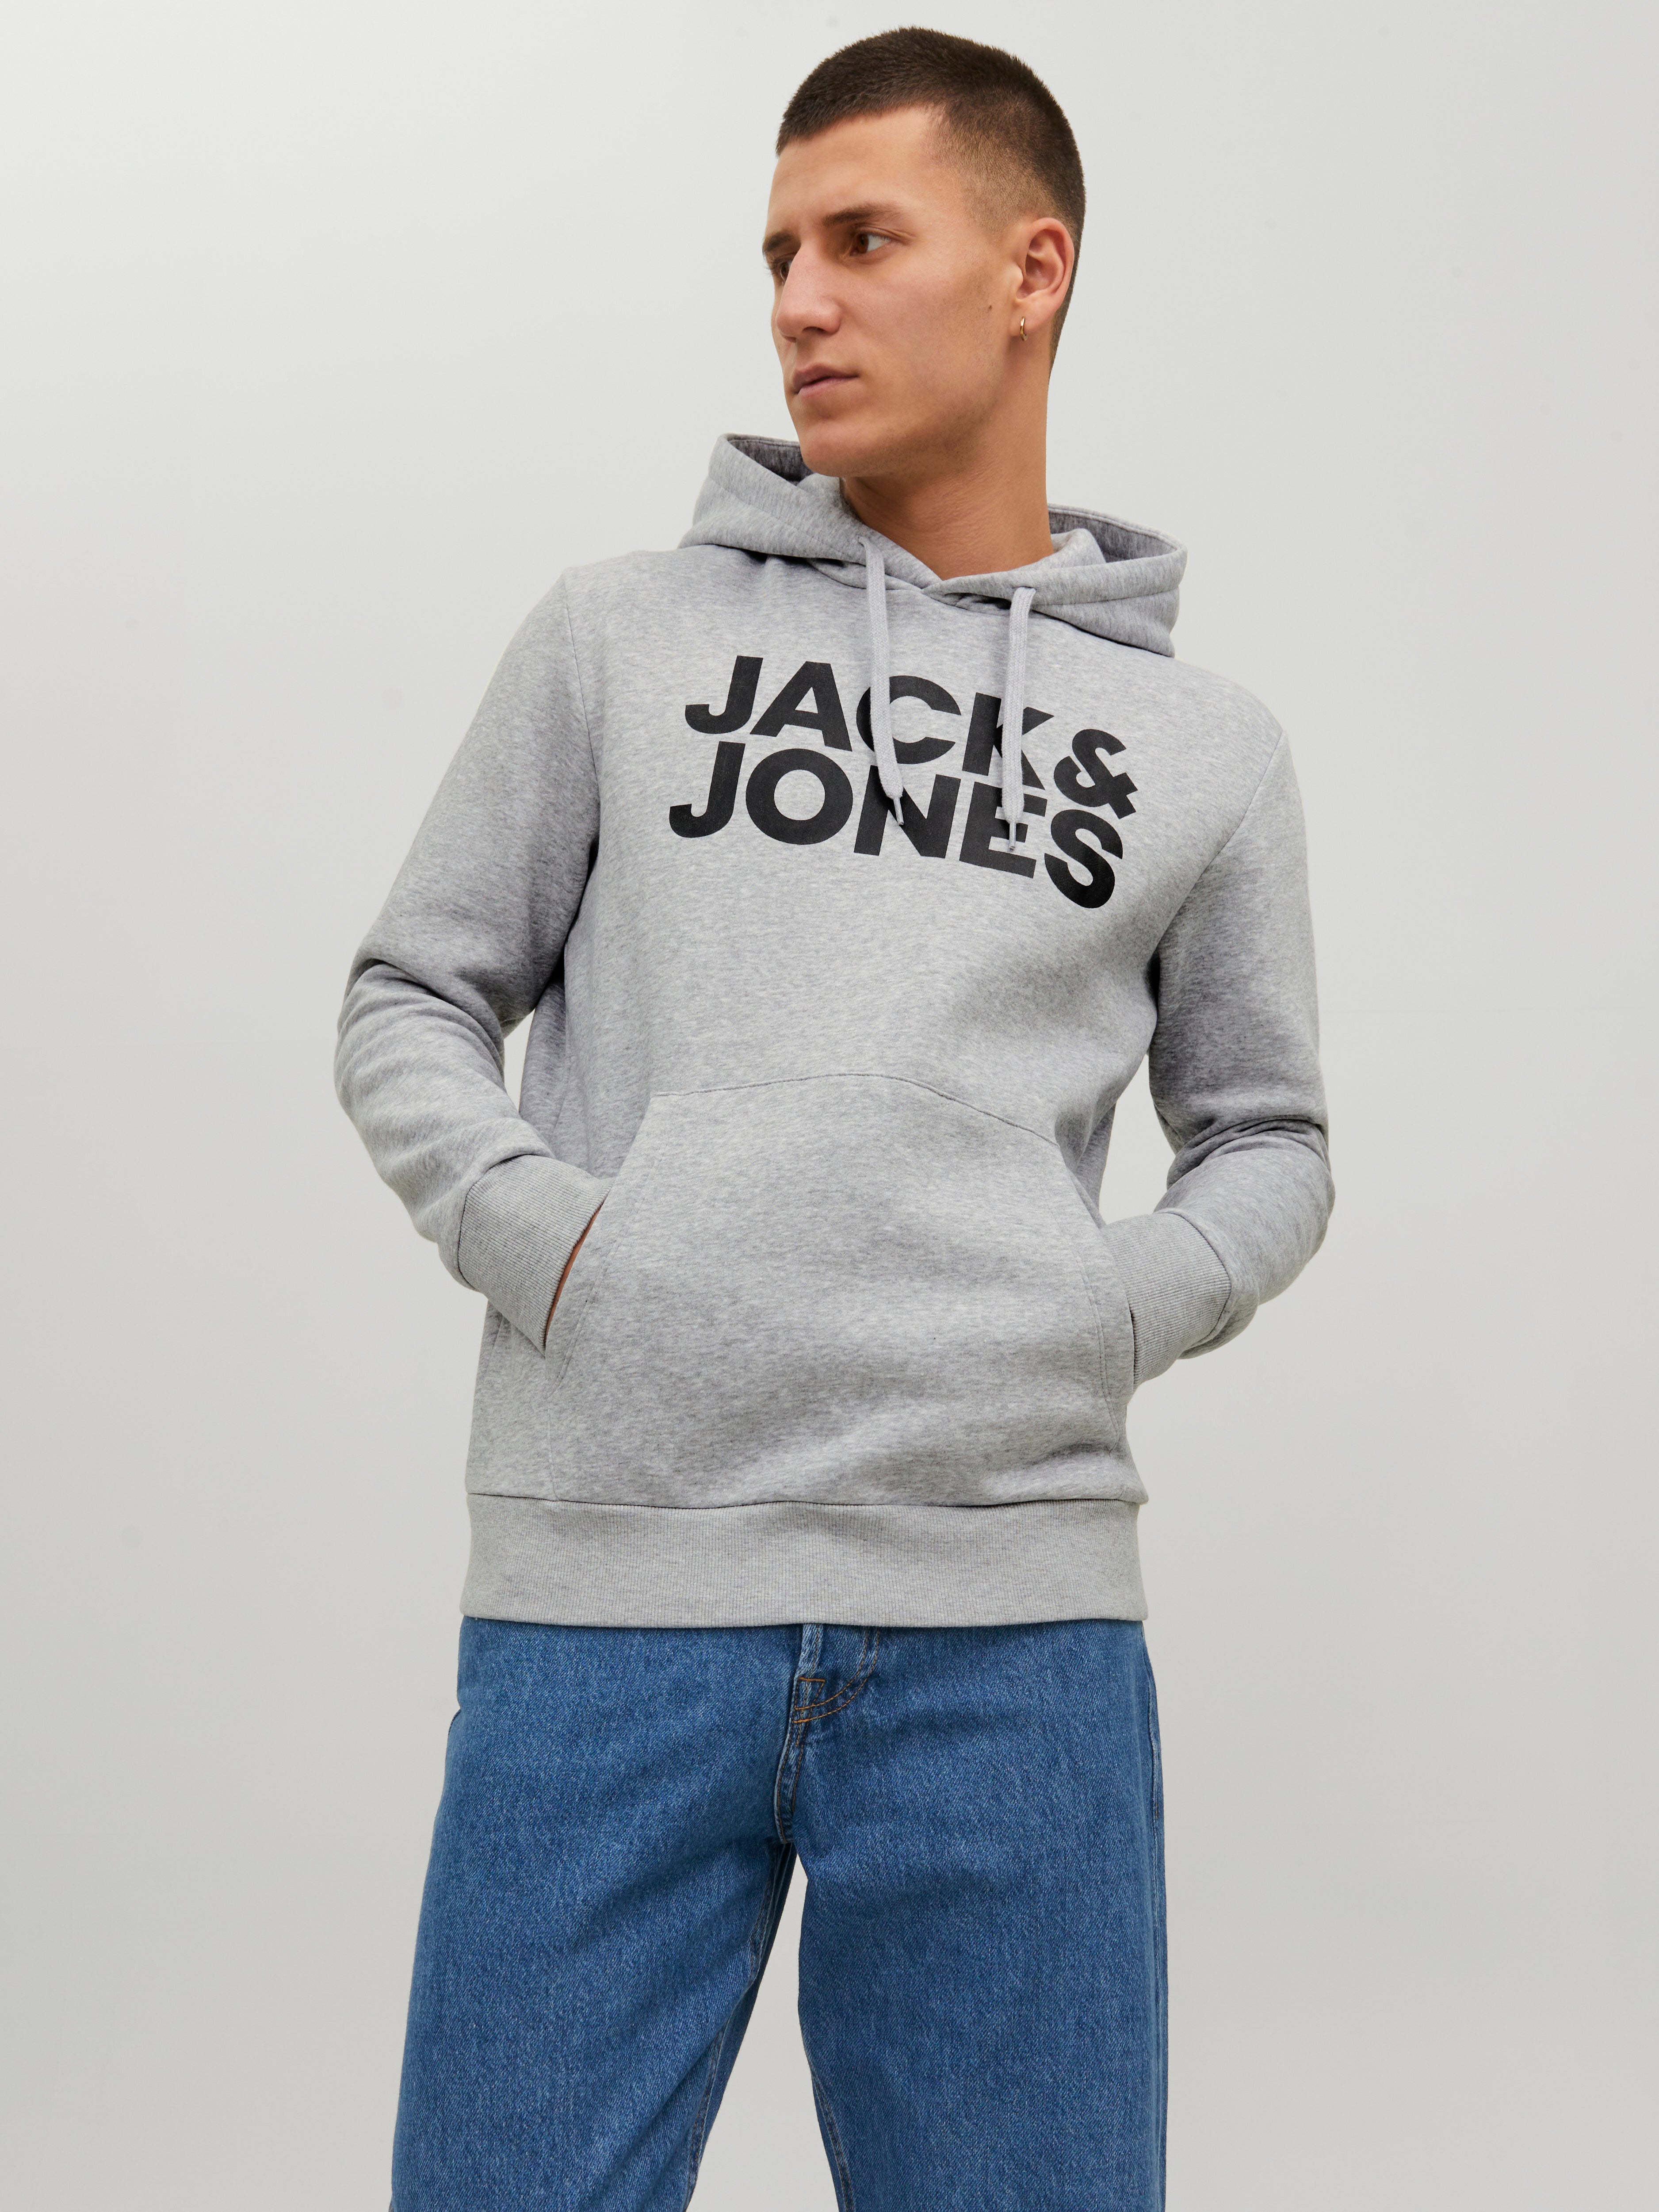 Sweatshirts For Men: Black, White & More | JACK & JONES